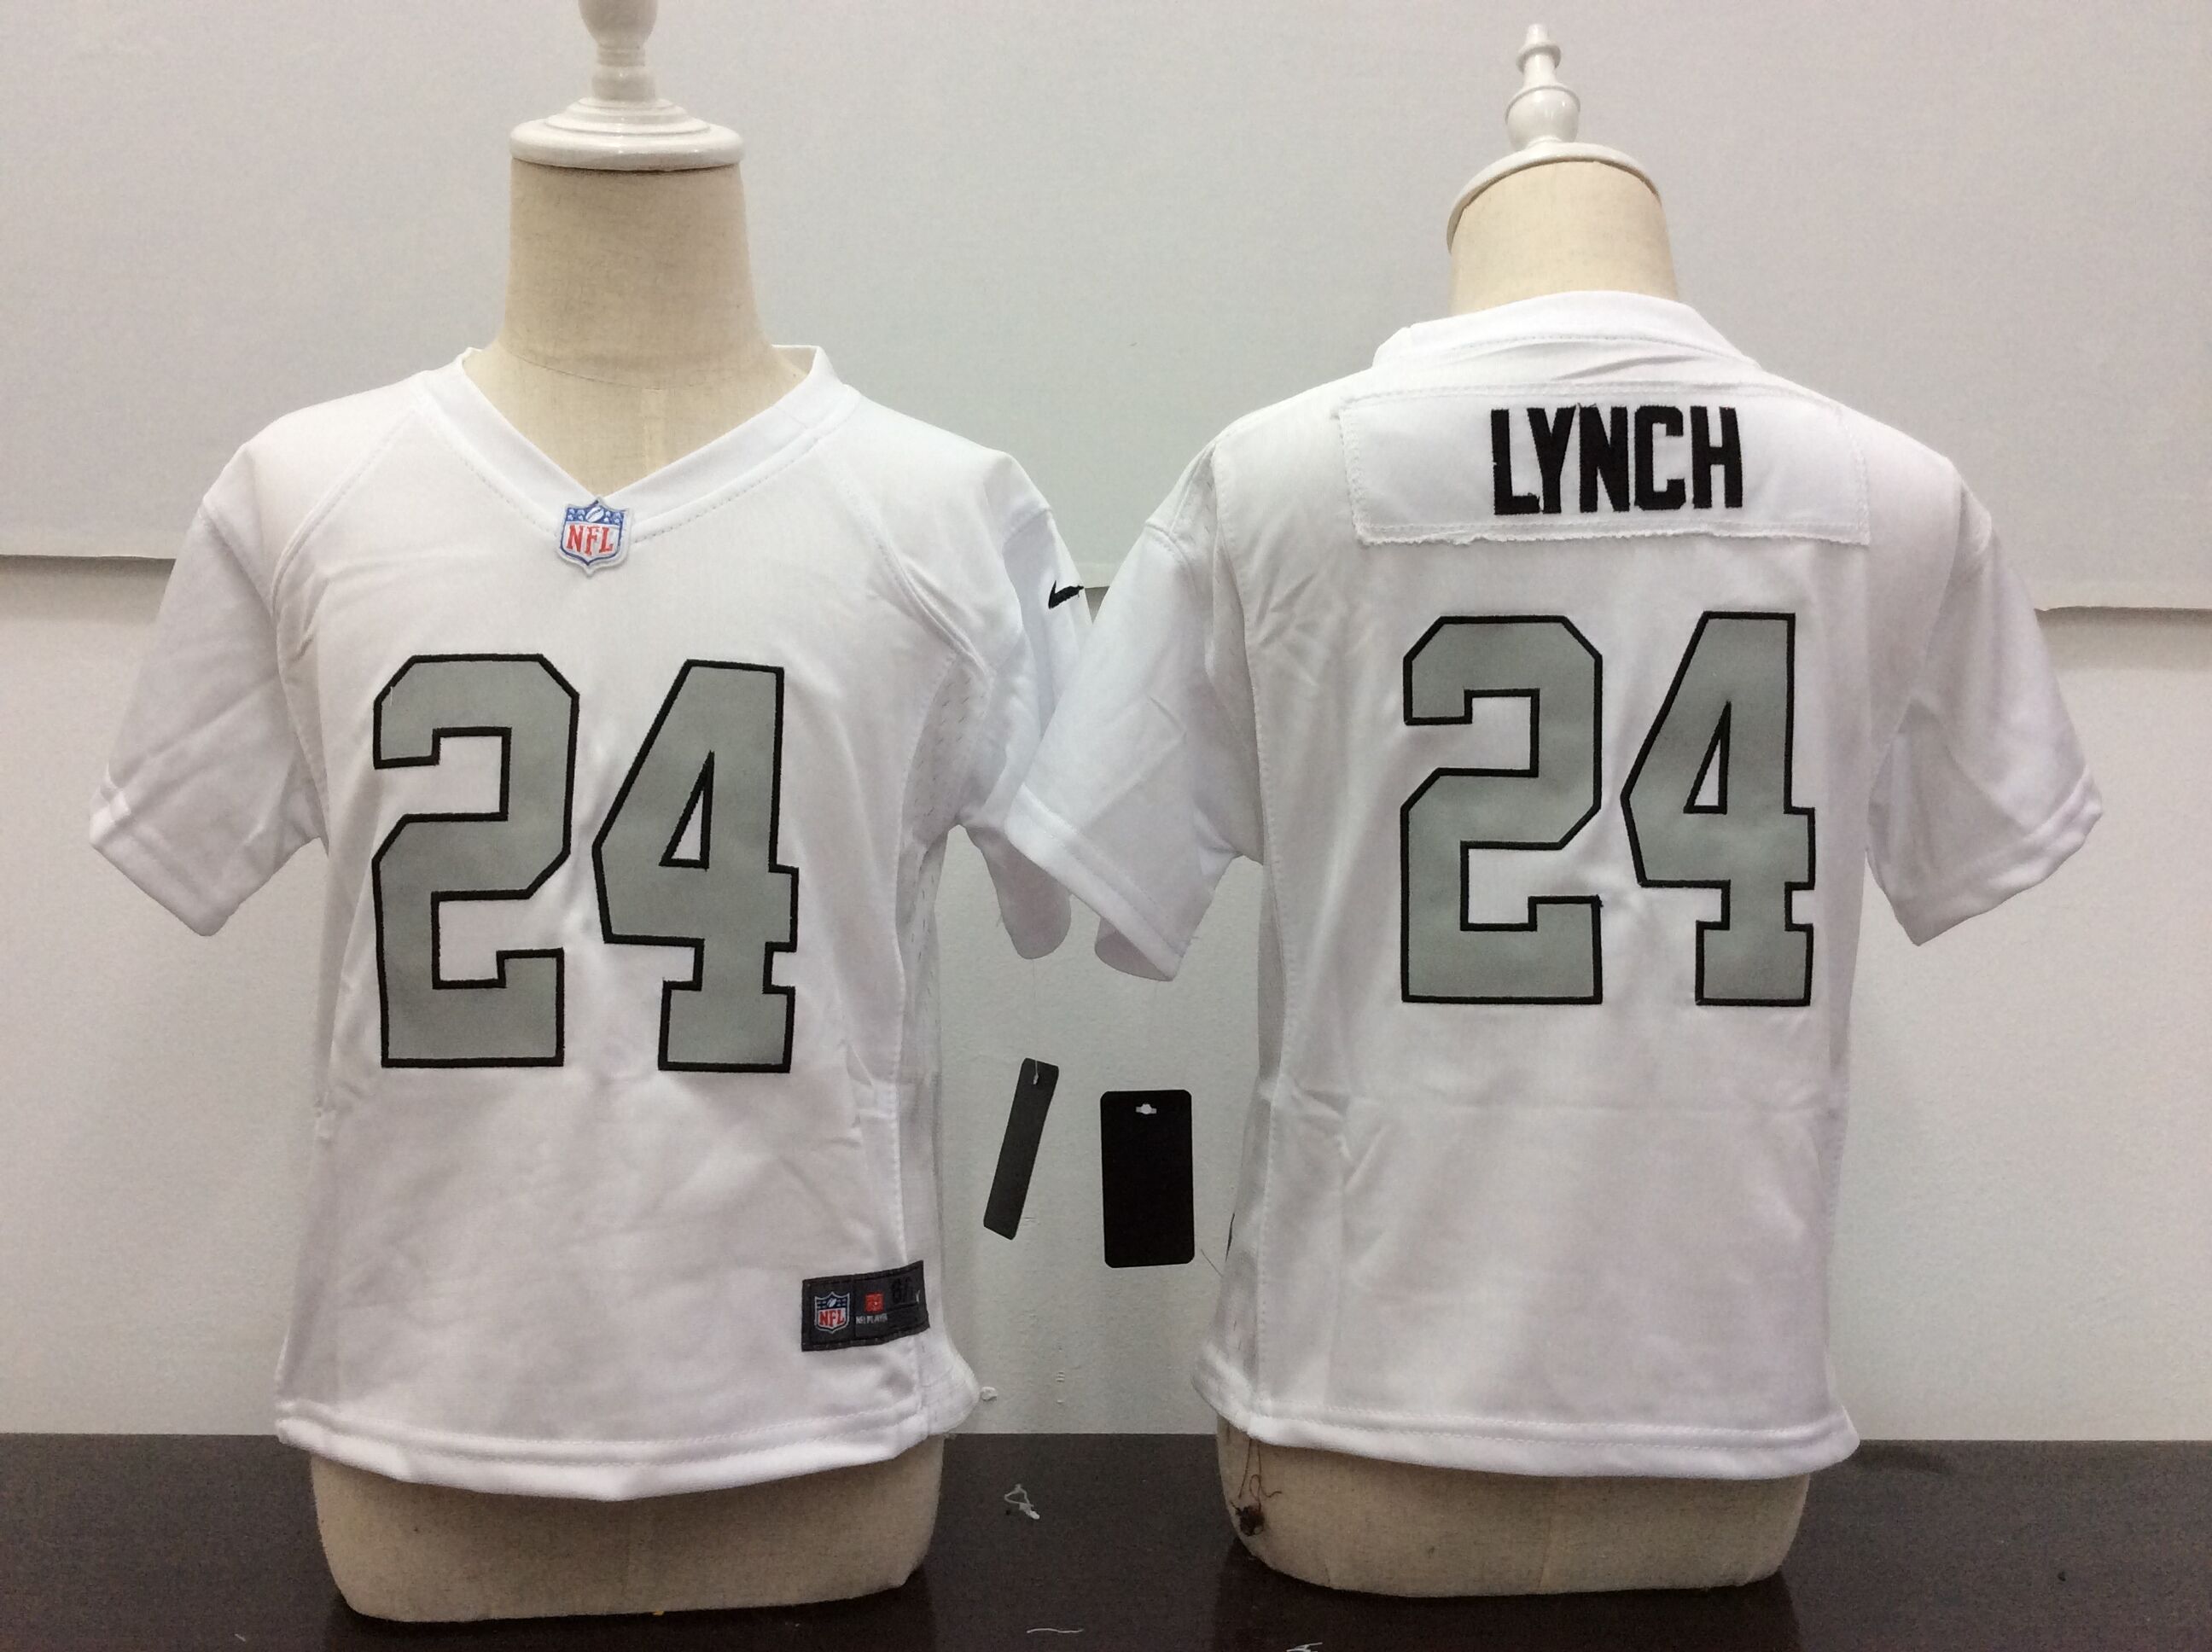 Toddler Nike Oakland Raiders #24 Marshawn Lynch White Stitched NFL Jersey